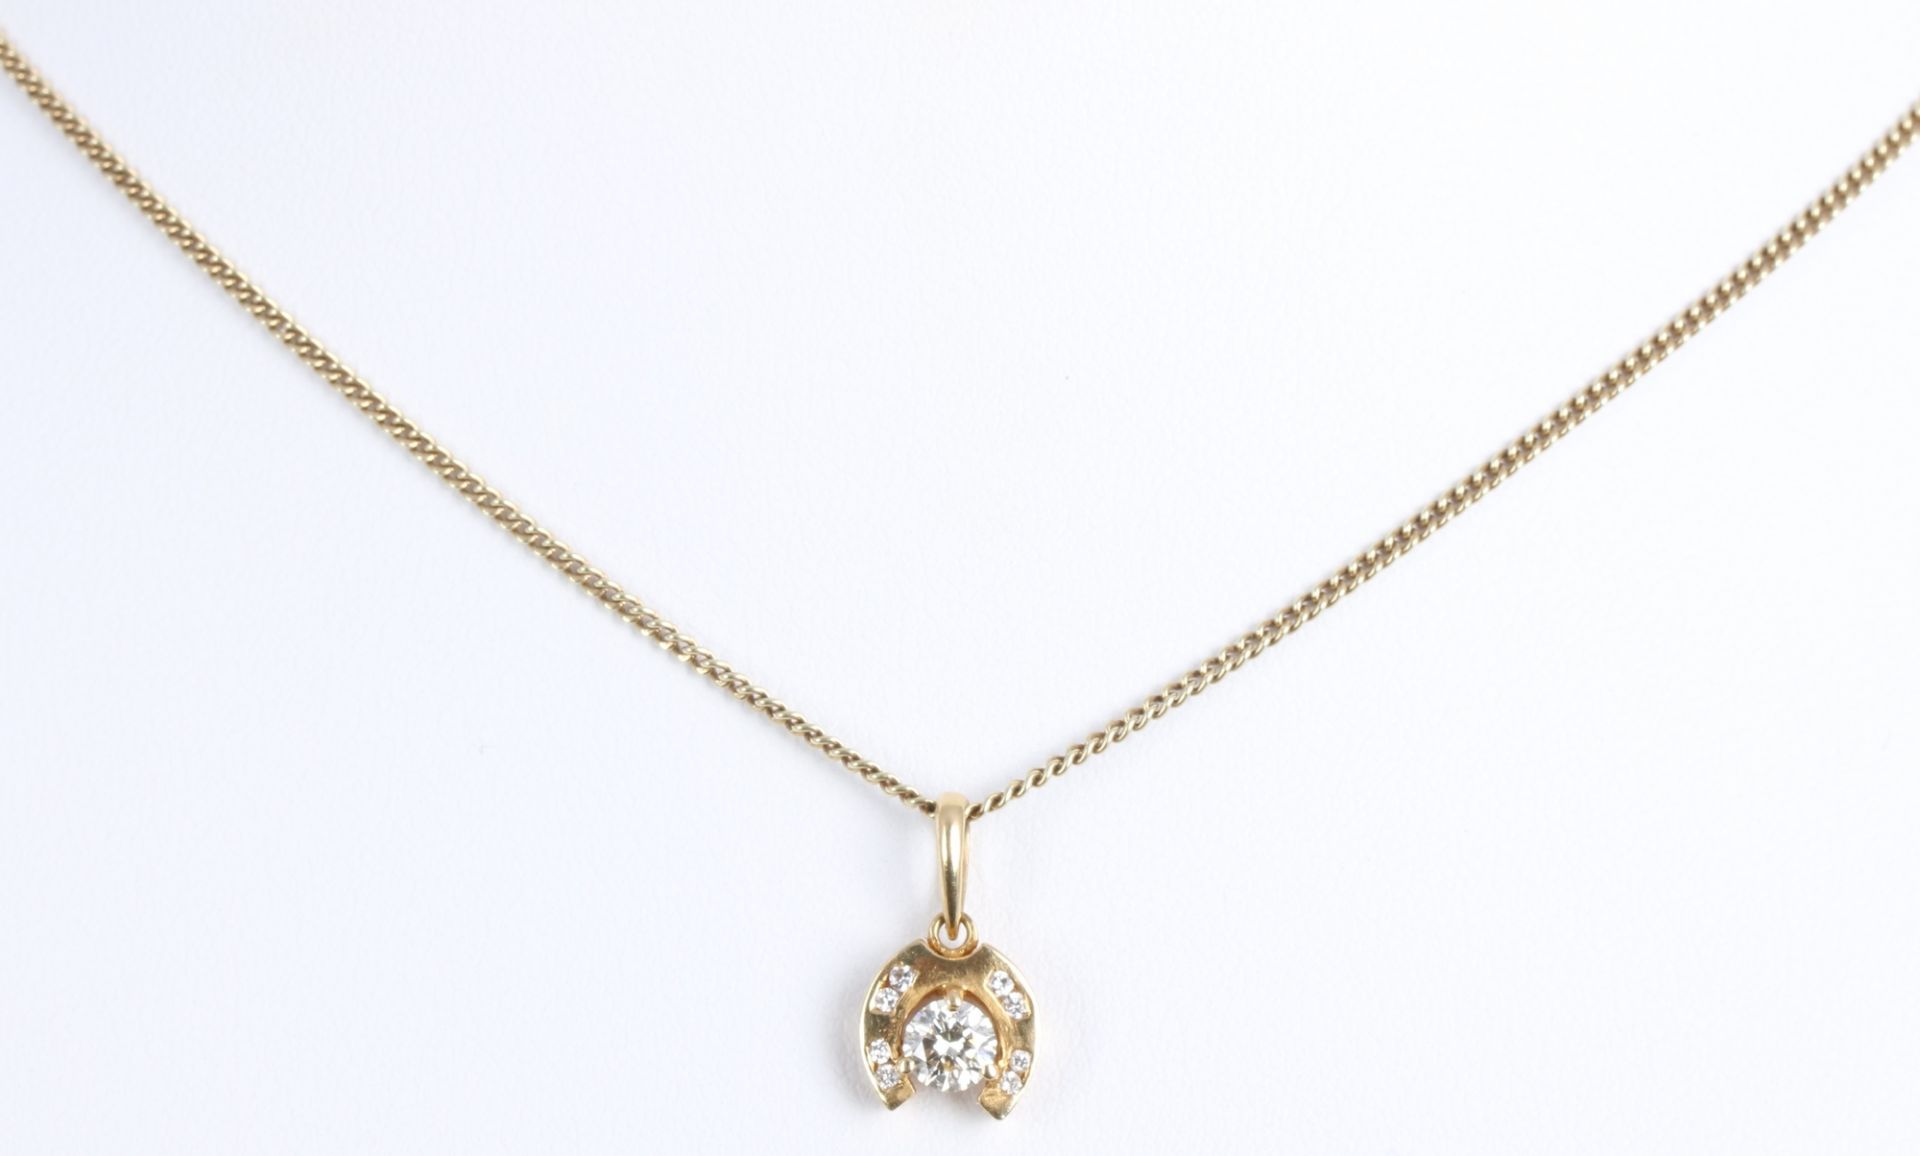 750 Gold Hufeisenanhänger Brillant 0.25ct an 585 Gold Kette, 18K diamond pendant with 14K necklace, - Bild 2 aus 5